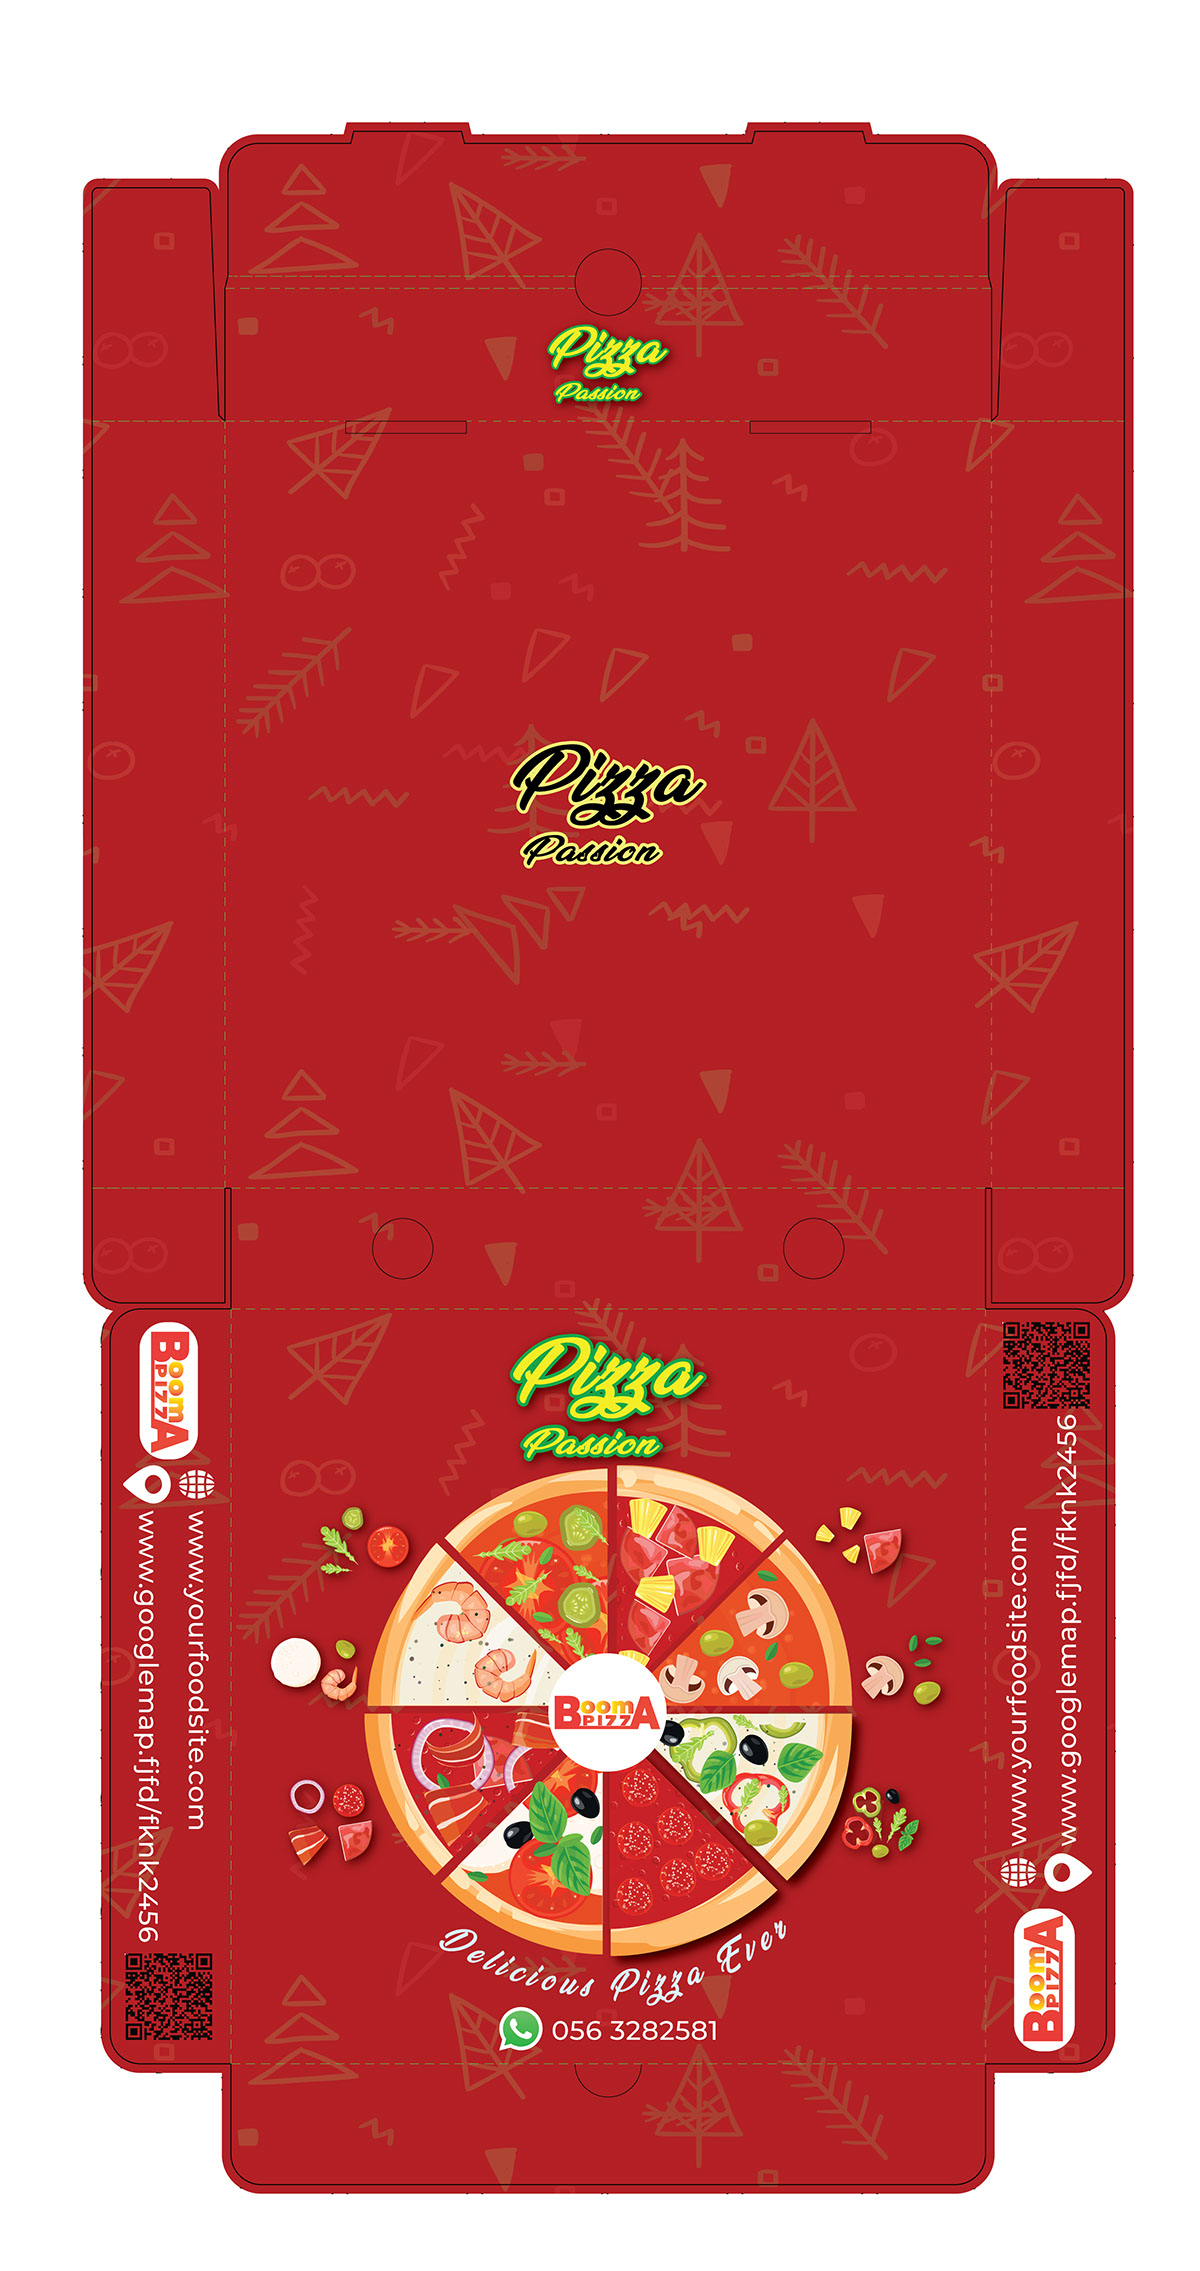 pizza box design rendition image